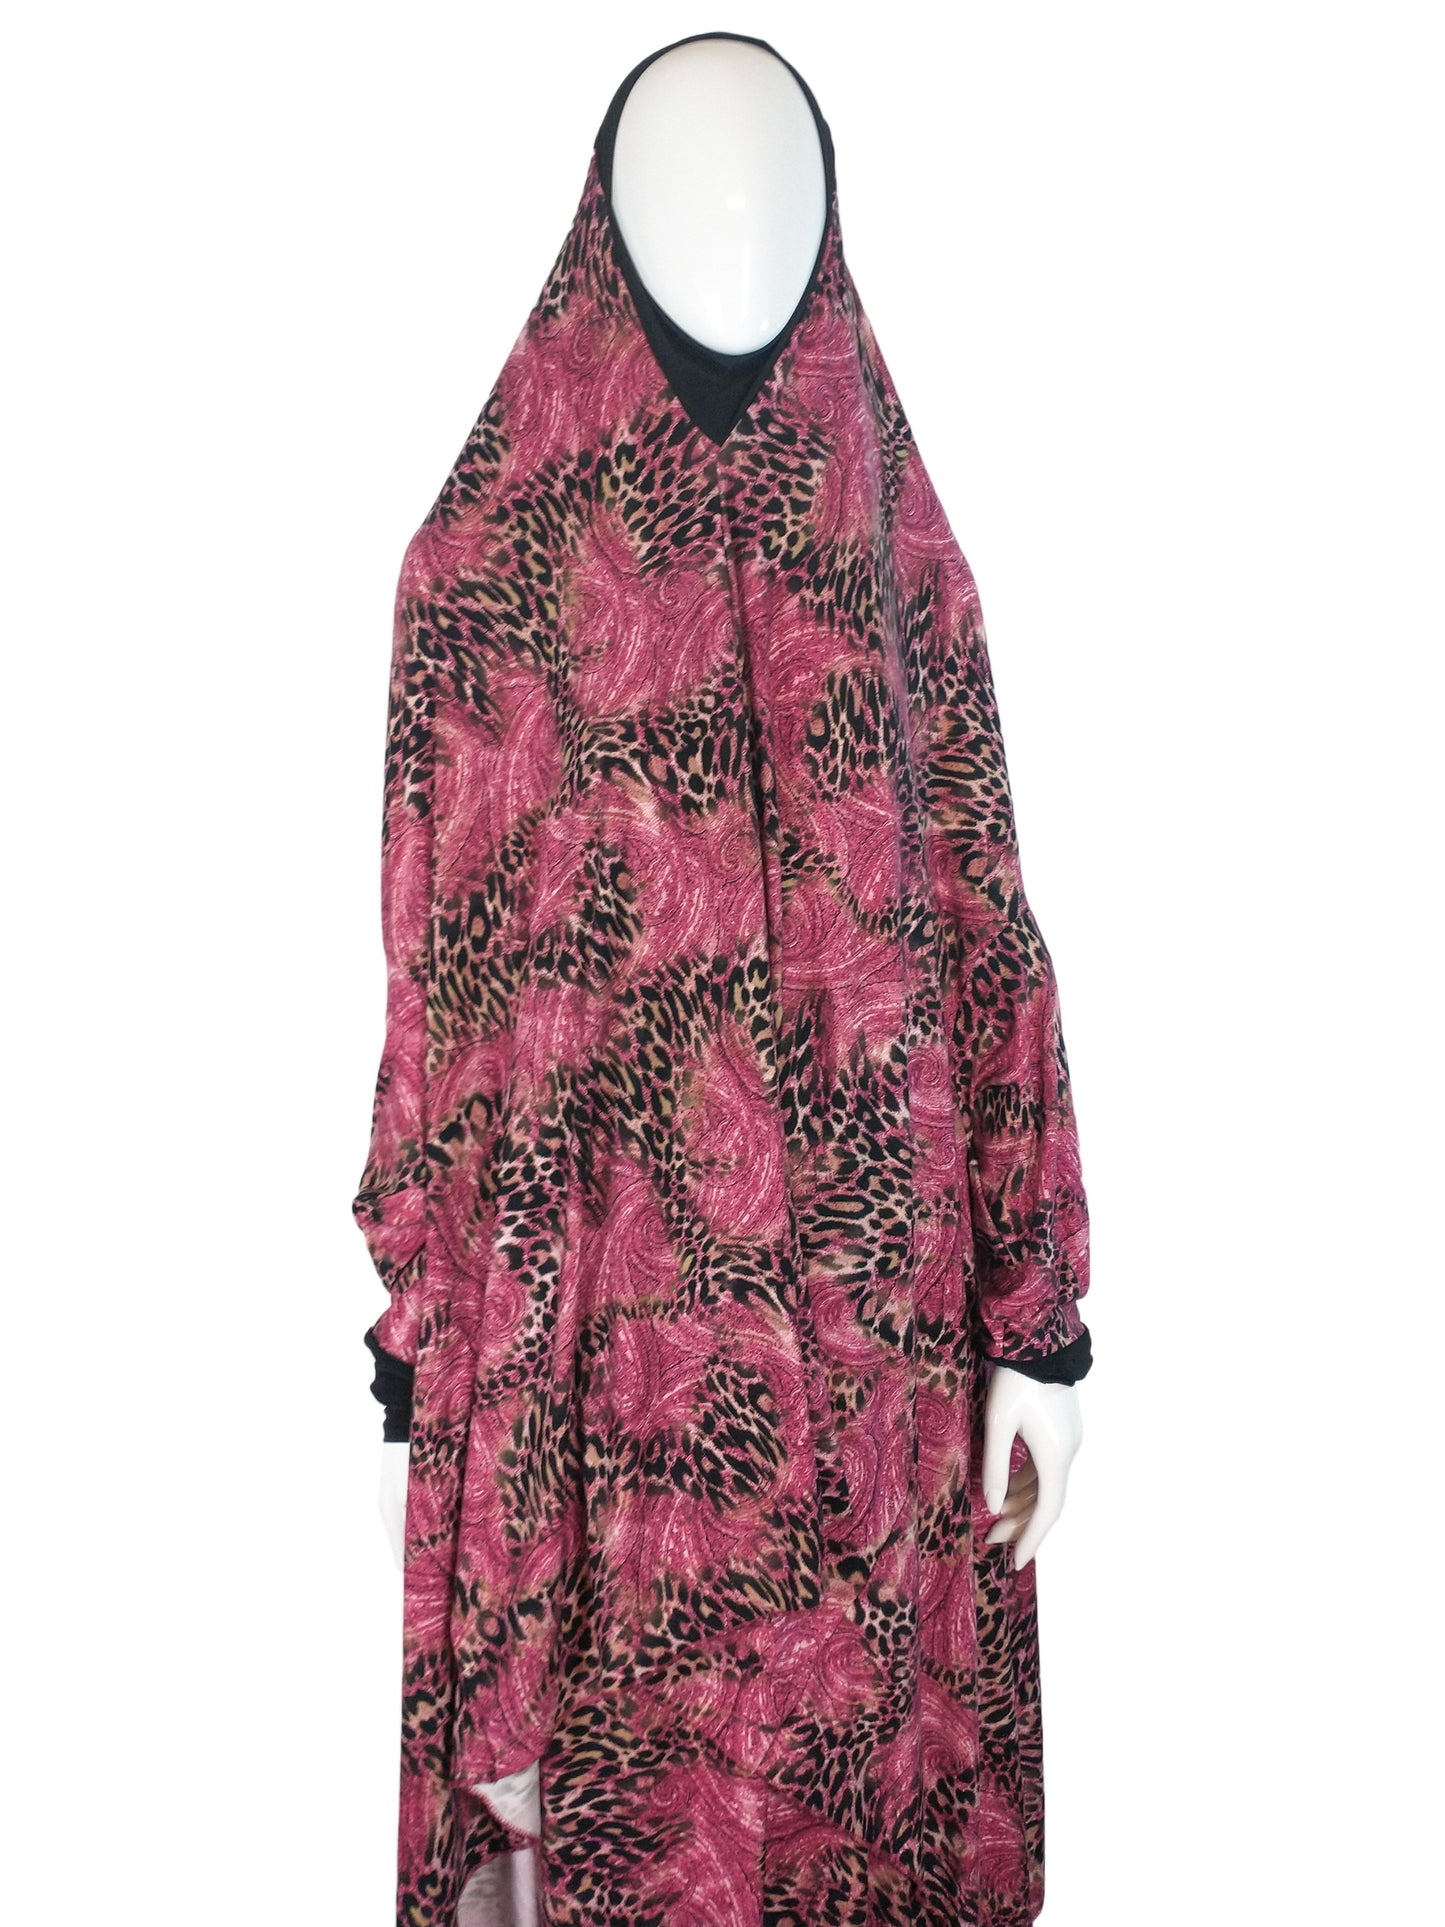 Abstract Black Meron Two Piece Prayer Dress - Smile Europe Wholesale 